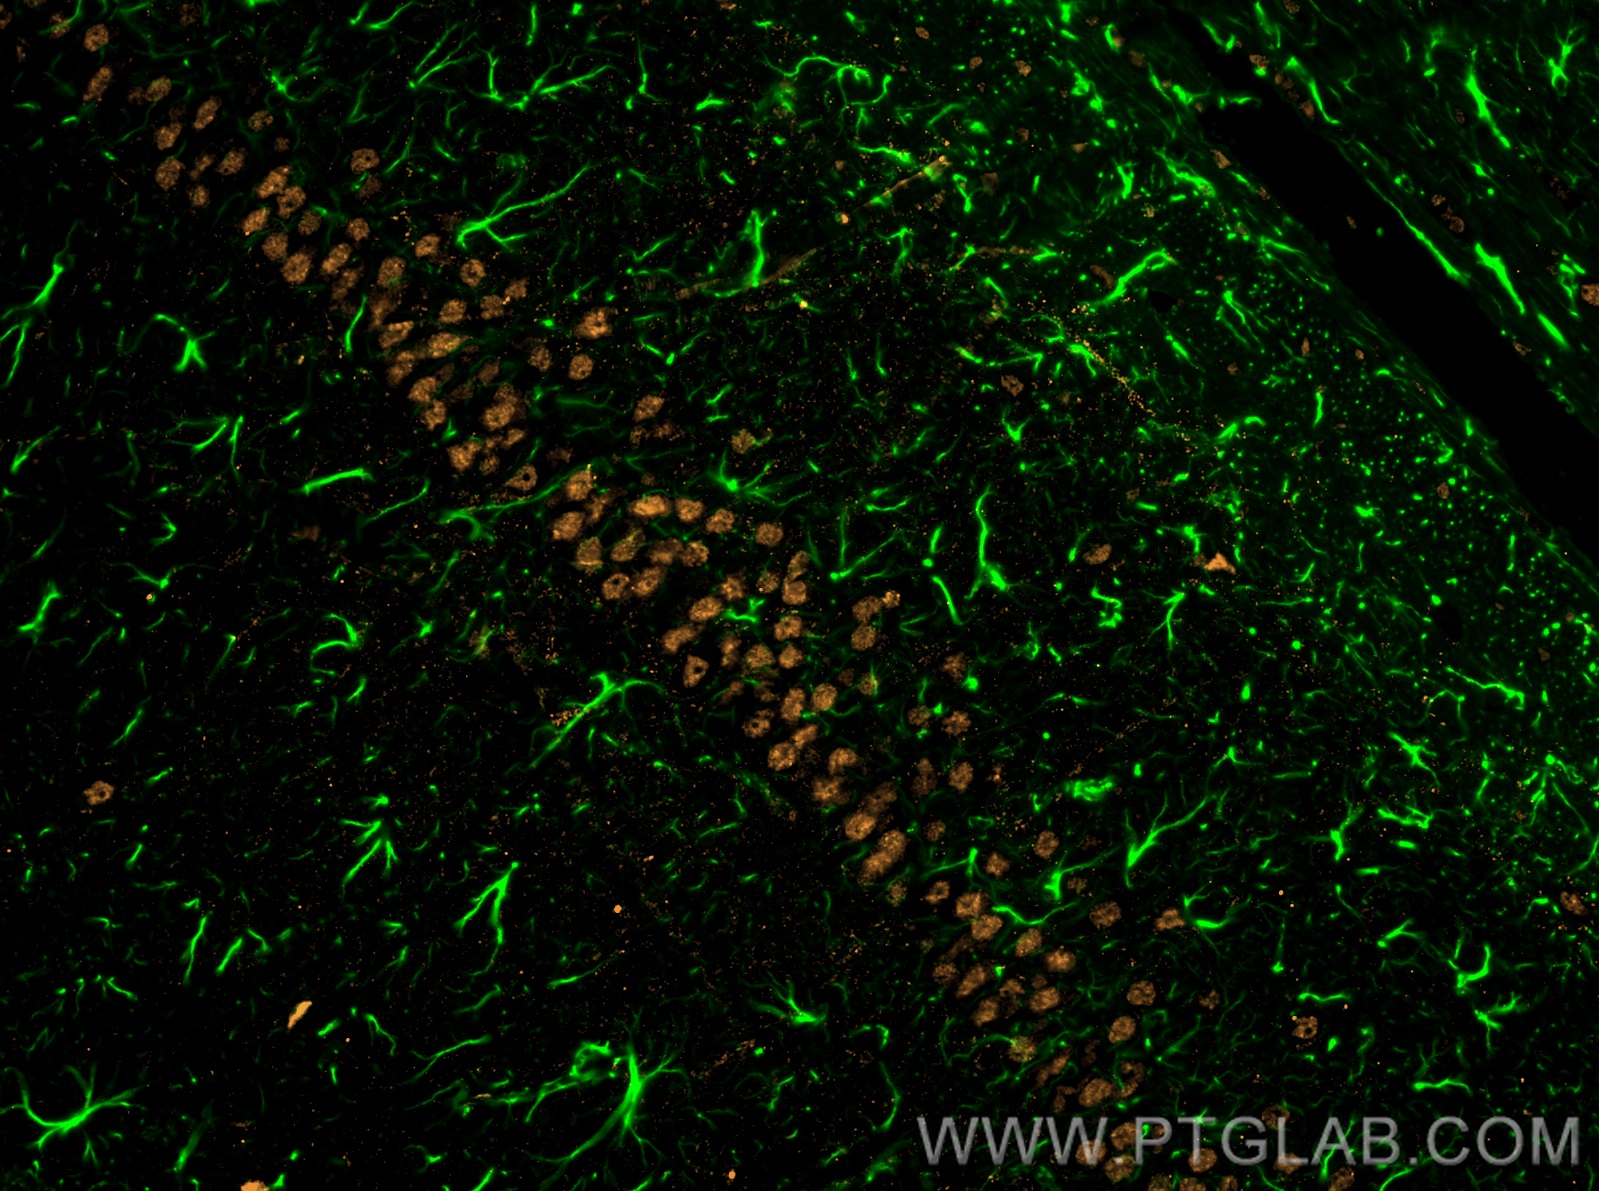 Immunofluorescence of rat brain: rat brain FFPE section was stained with Rabbit anti-GFAP polyclonal antibody (16825-1-AP, 1:200, green) and mouse anti-NeuN monoclonal antibody (66836-1-Ig, orange). Multi-rAb CoraLite® Plus 488 conjugated Recombinant Goat anti-rabbit secondary antibody (RGAR002, 1:500) and Multi-rAb CoraLite® Plus 555 conjugated Goat Anti-Mouse Recombinant Secondary Antibody (H+L) were used for detection (RGAM003, 1:500) . 